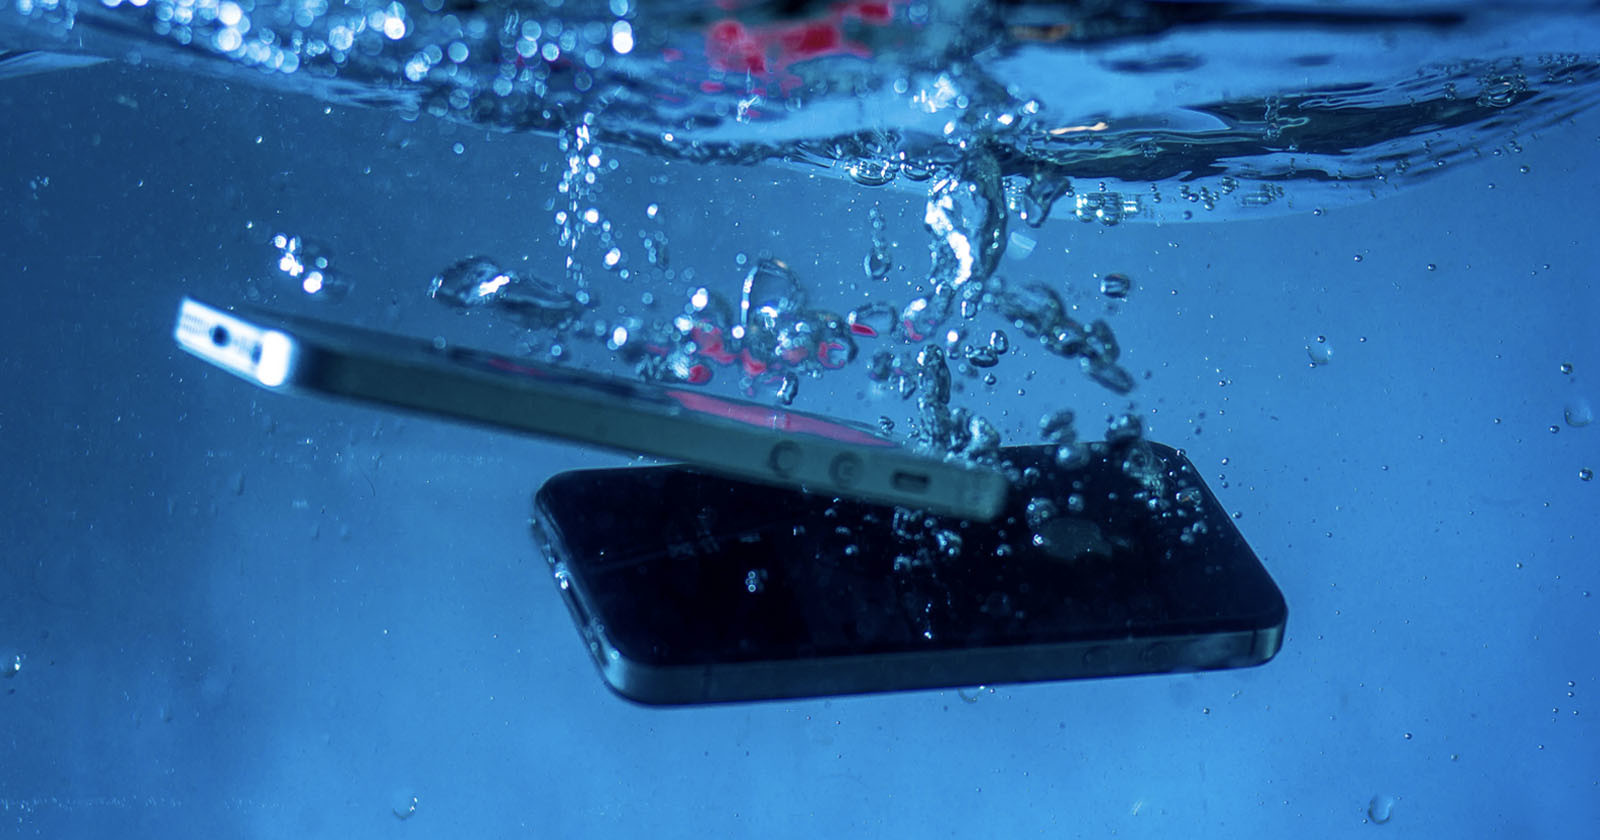  future iphones may able take photos rain 